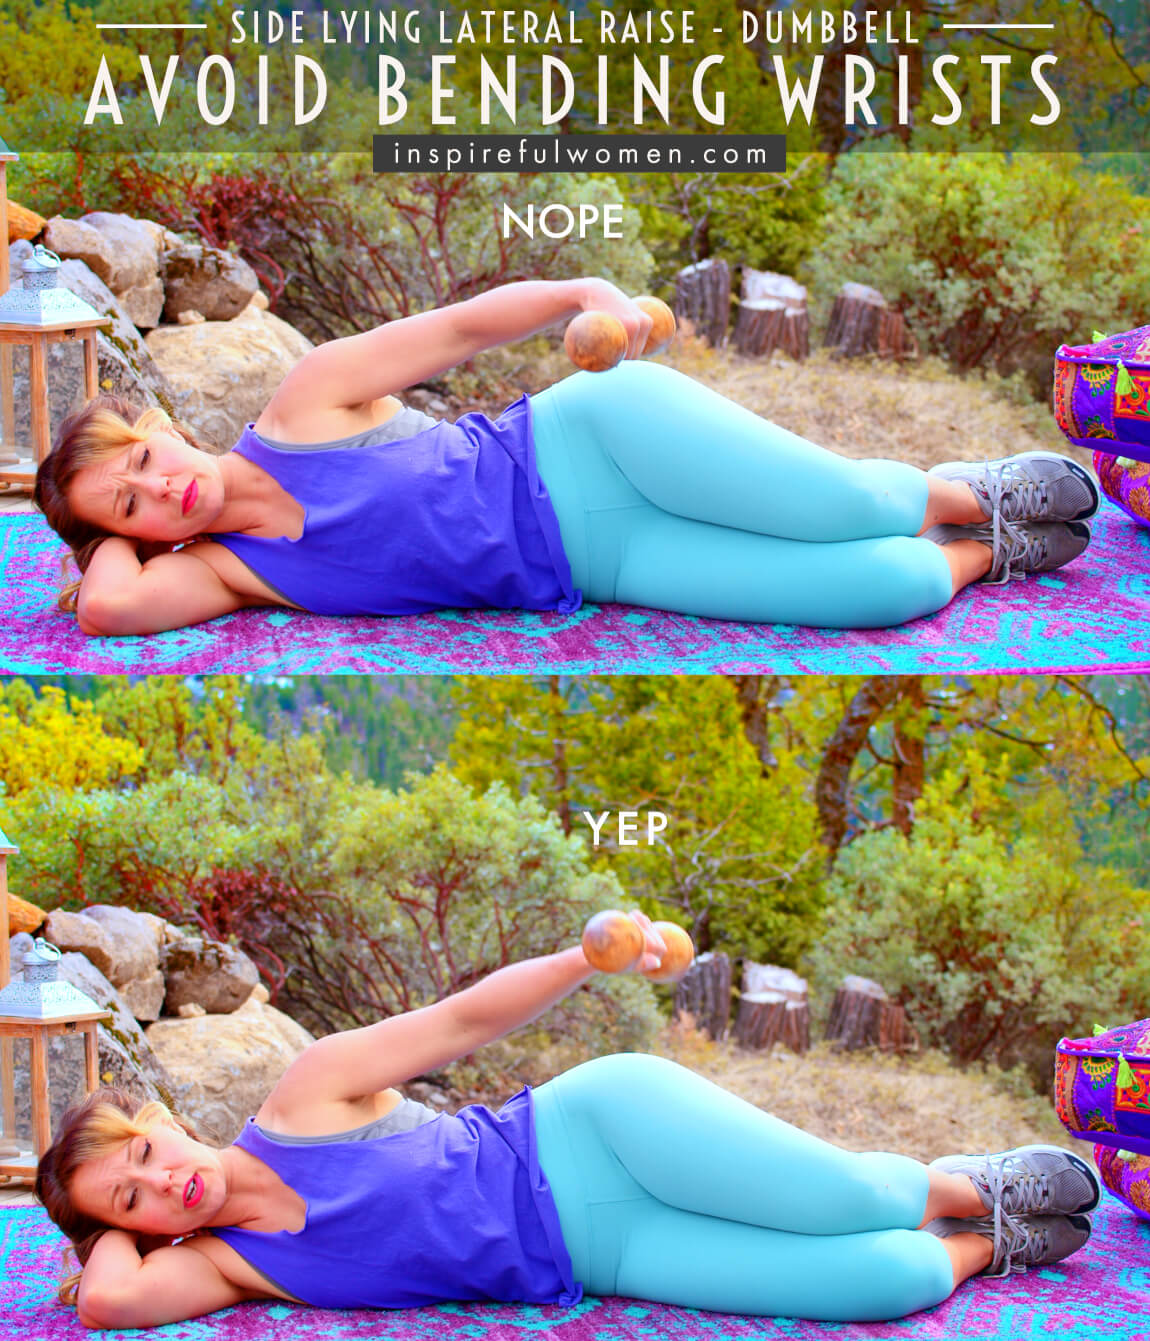 avoid-bending-wrists-side-lying-lateral-raise-dumbbell-shoulder-exercise-at-home-proper-form